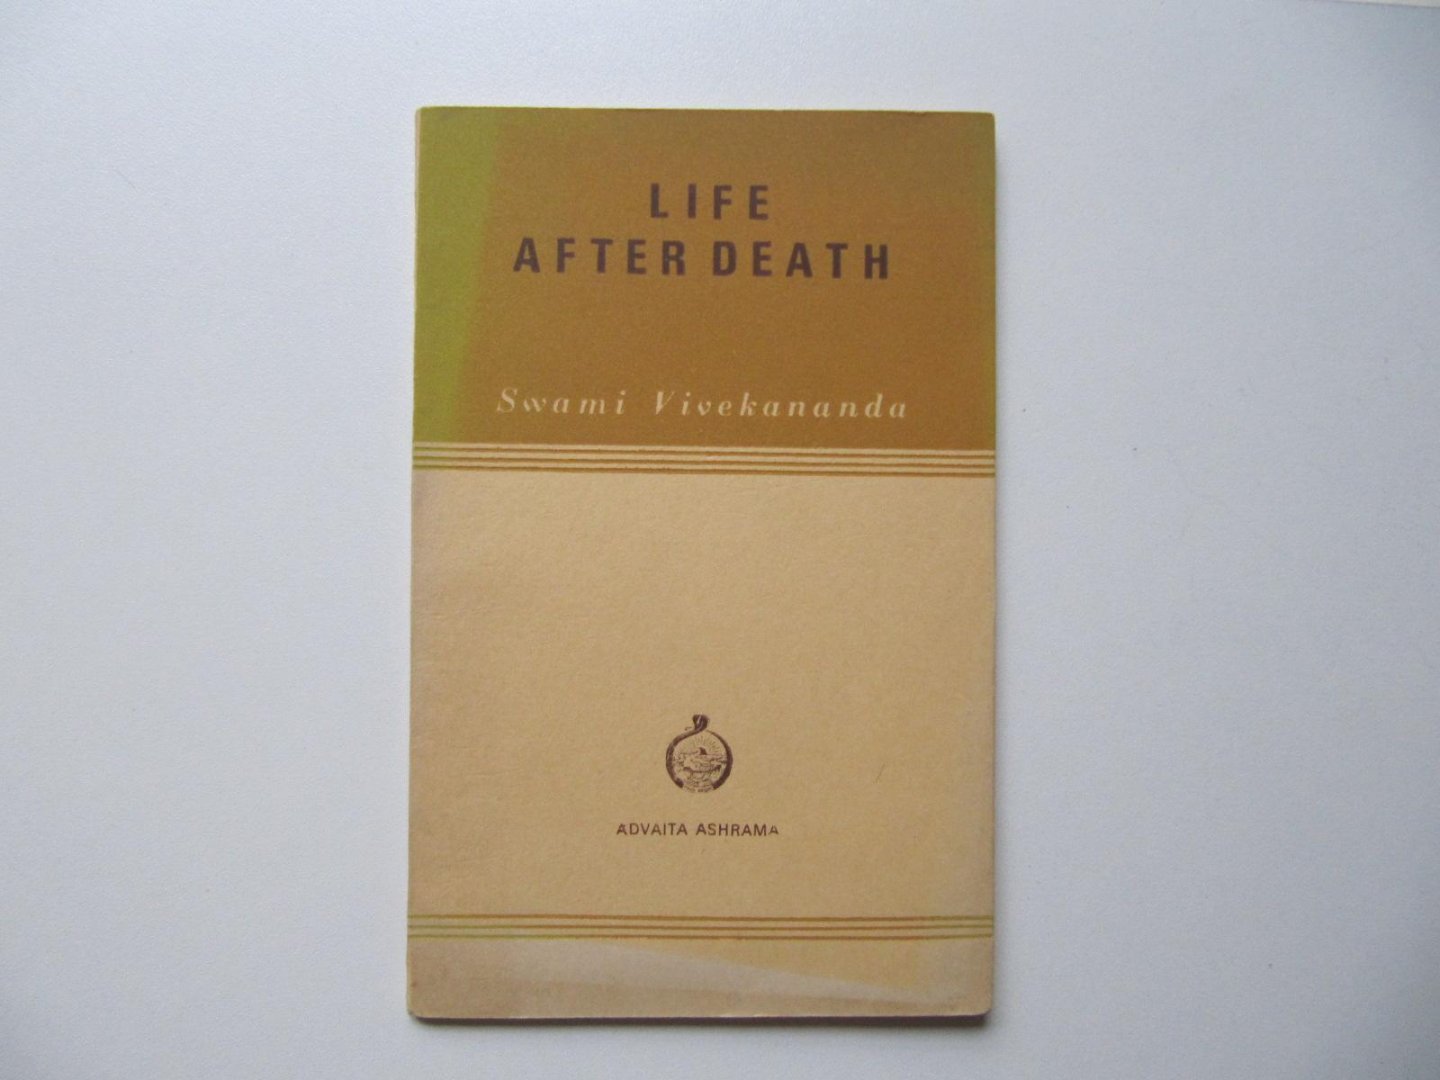 Swami Vivekananda - Life after Death